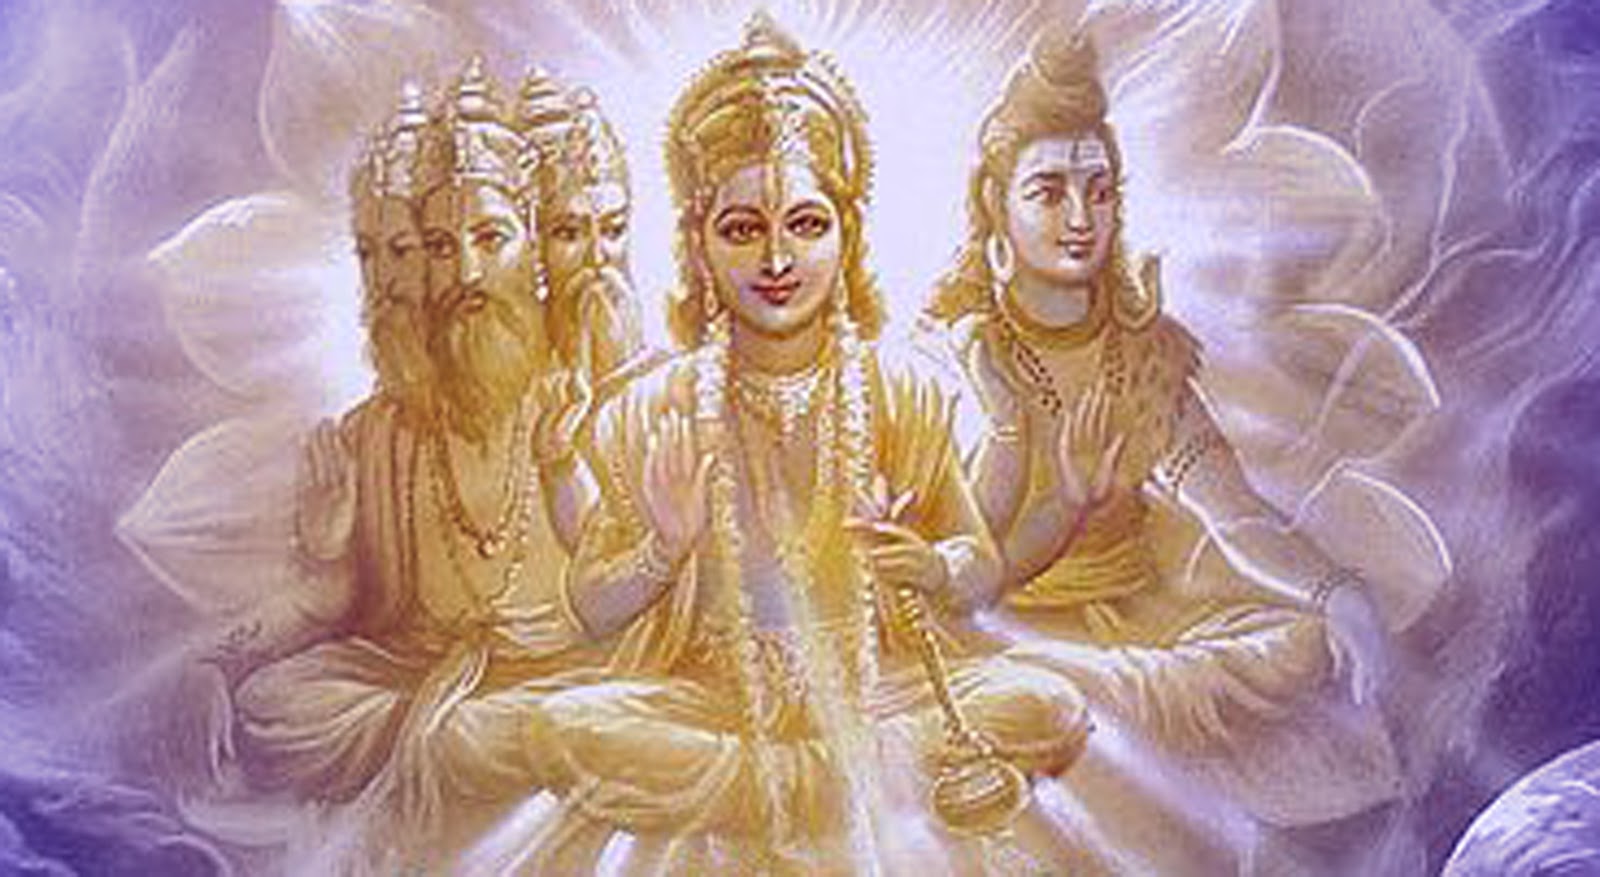 The meaning of upanishads by vishnu to brahma